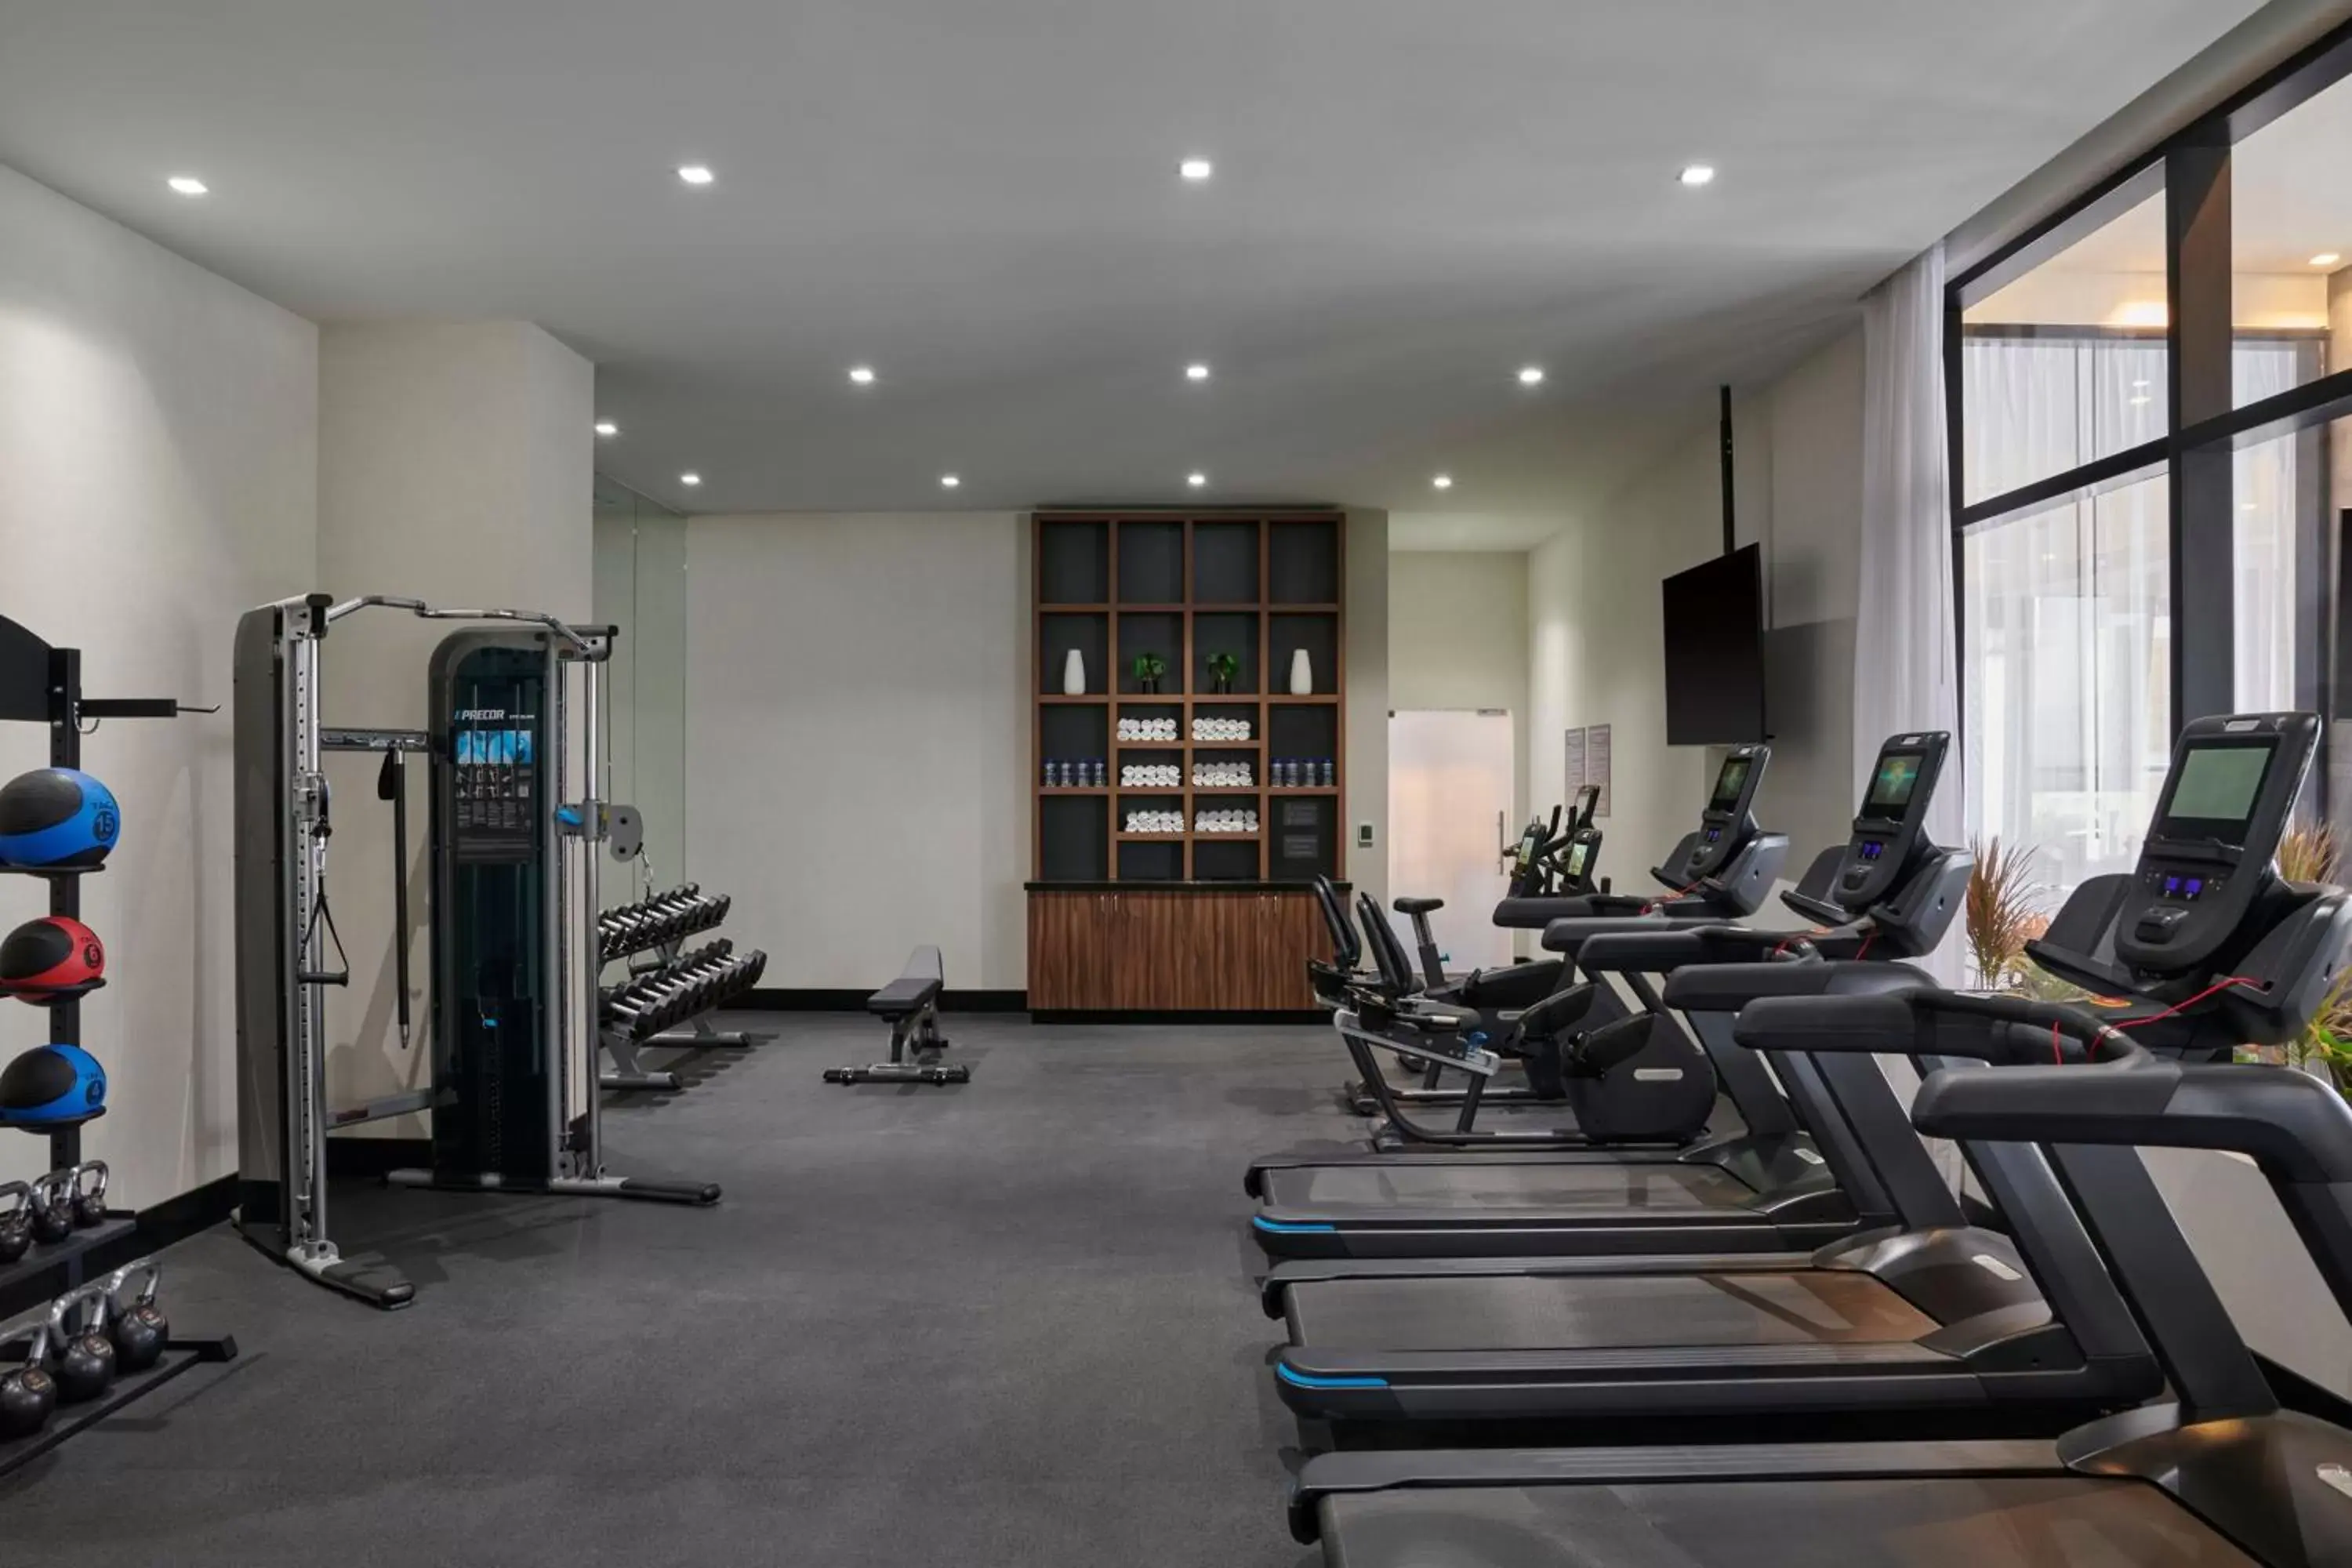 Fitness centre/facilities, Fitness Center/Facilities in AC Hotel by Marriott Saltillo